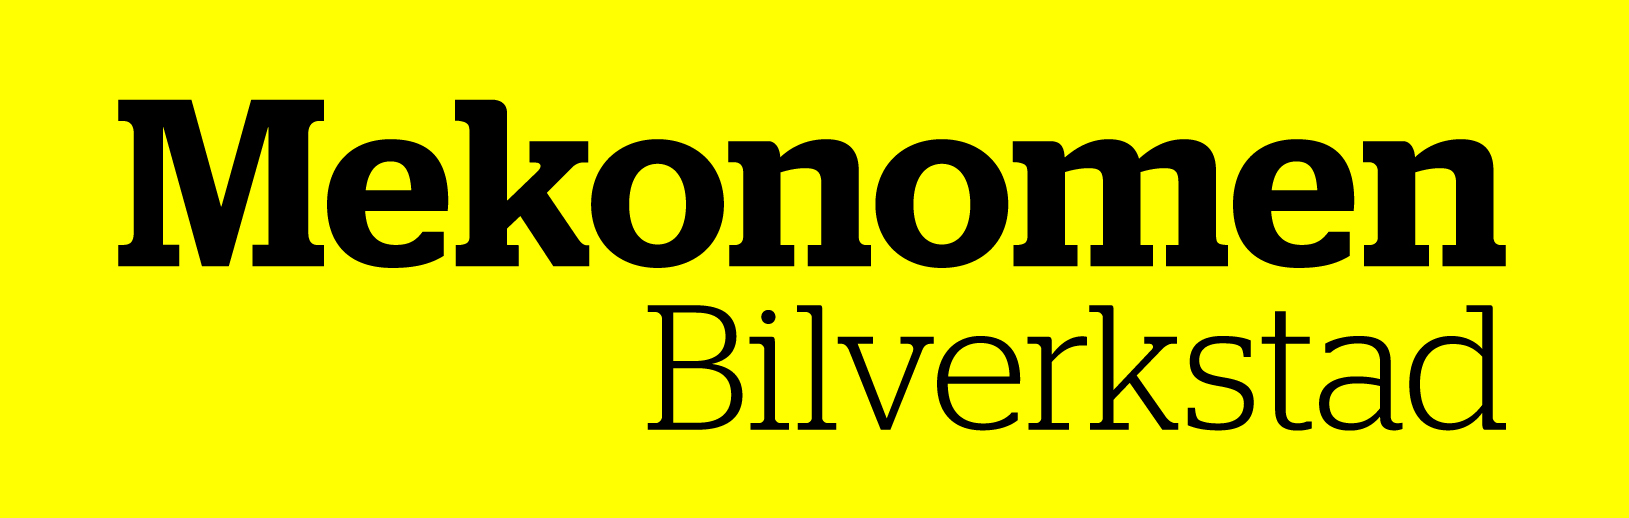 Mekonomen Bilverkstad - Billdal logo